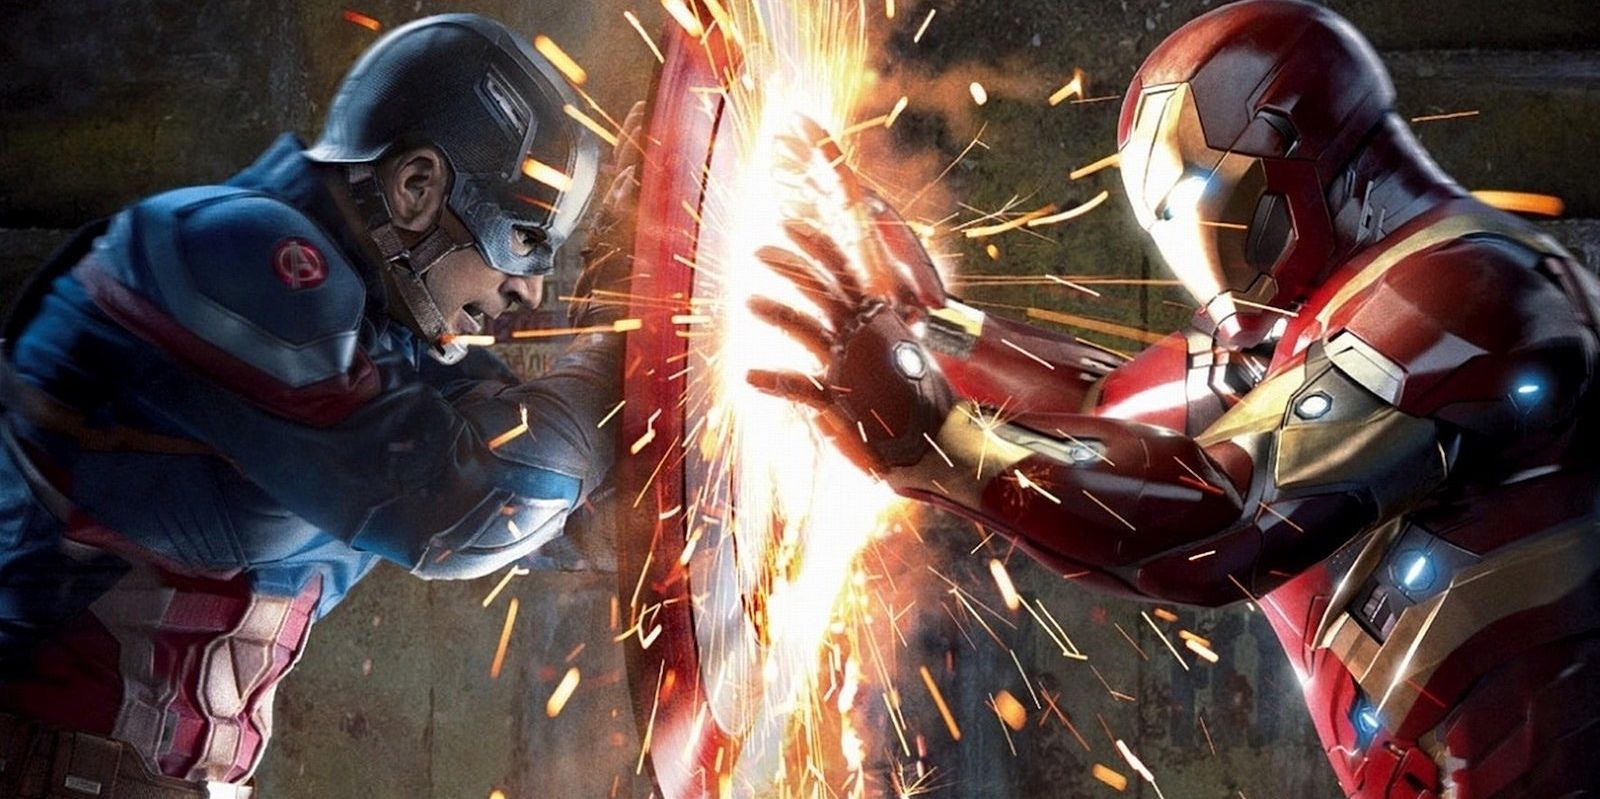 Captain America vs. Iron Man in Civil War